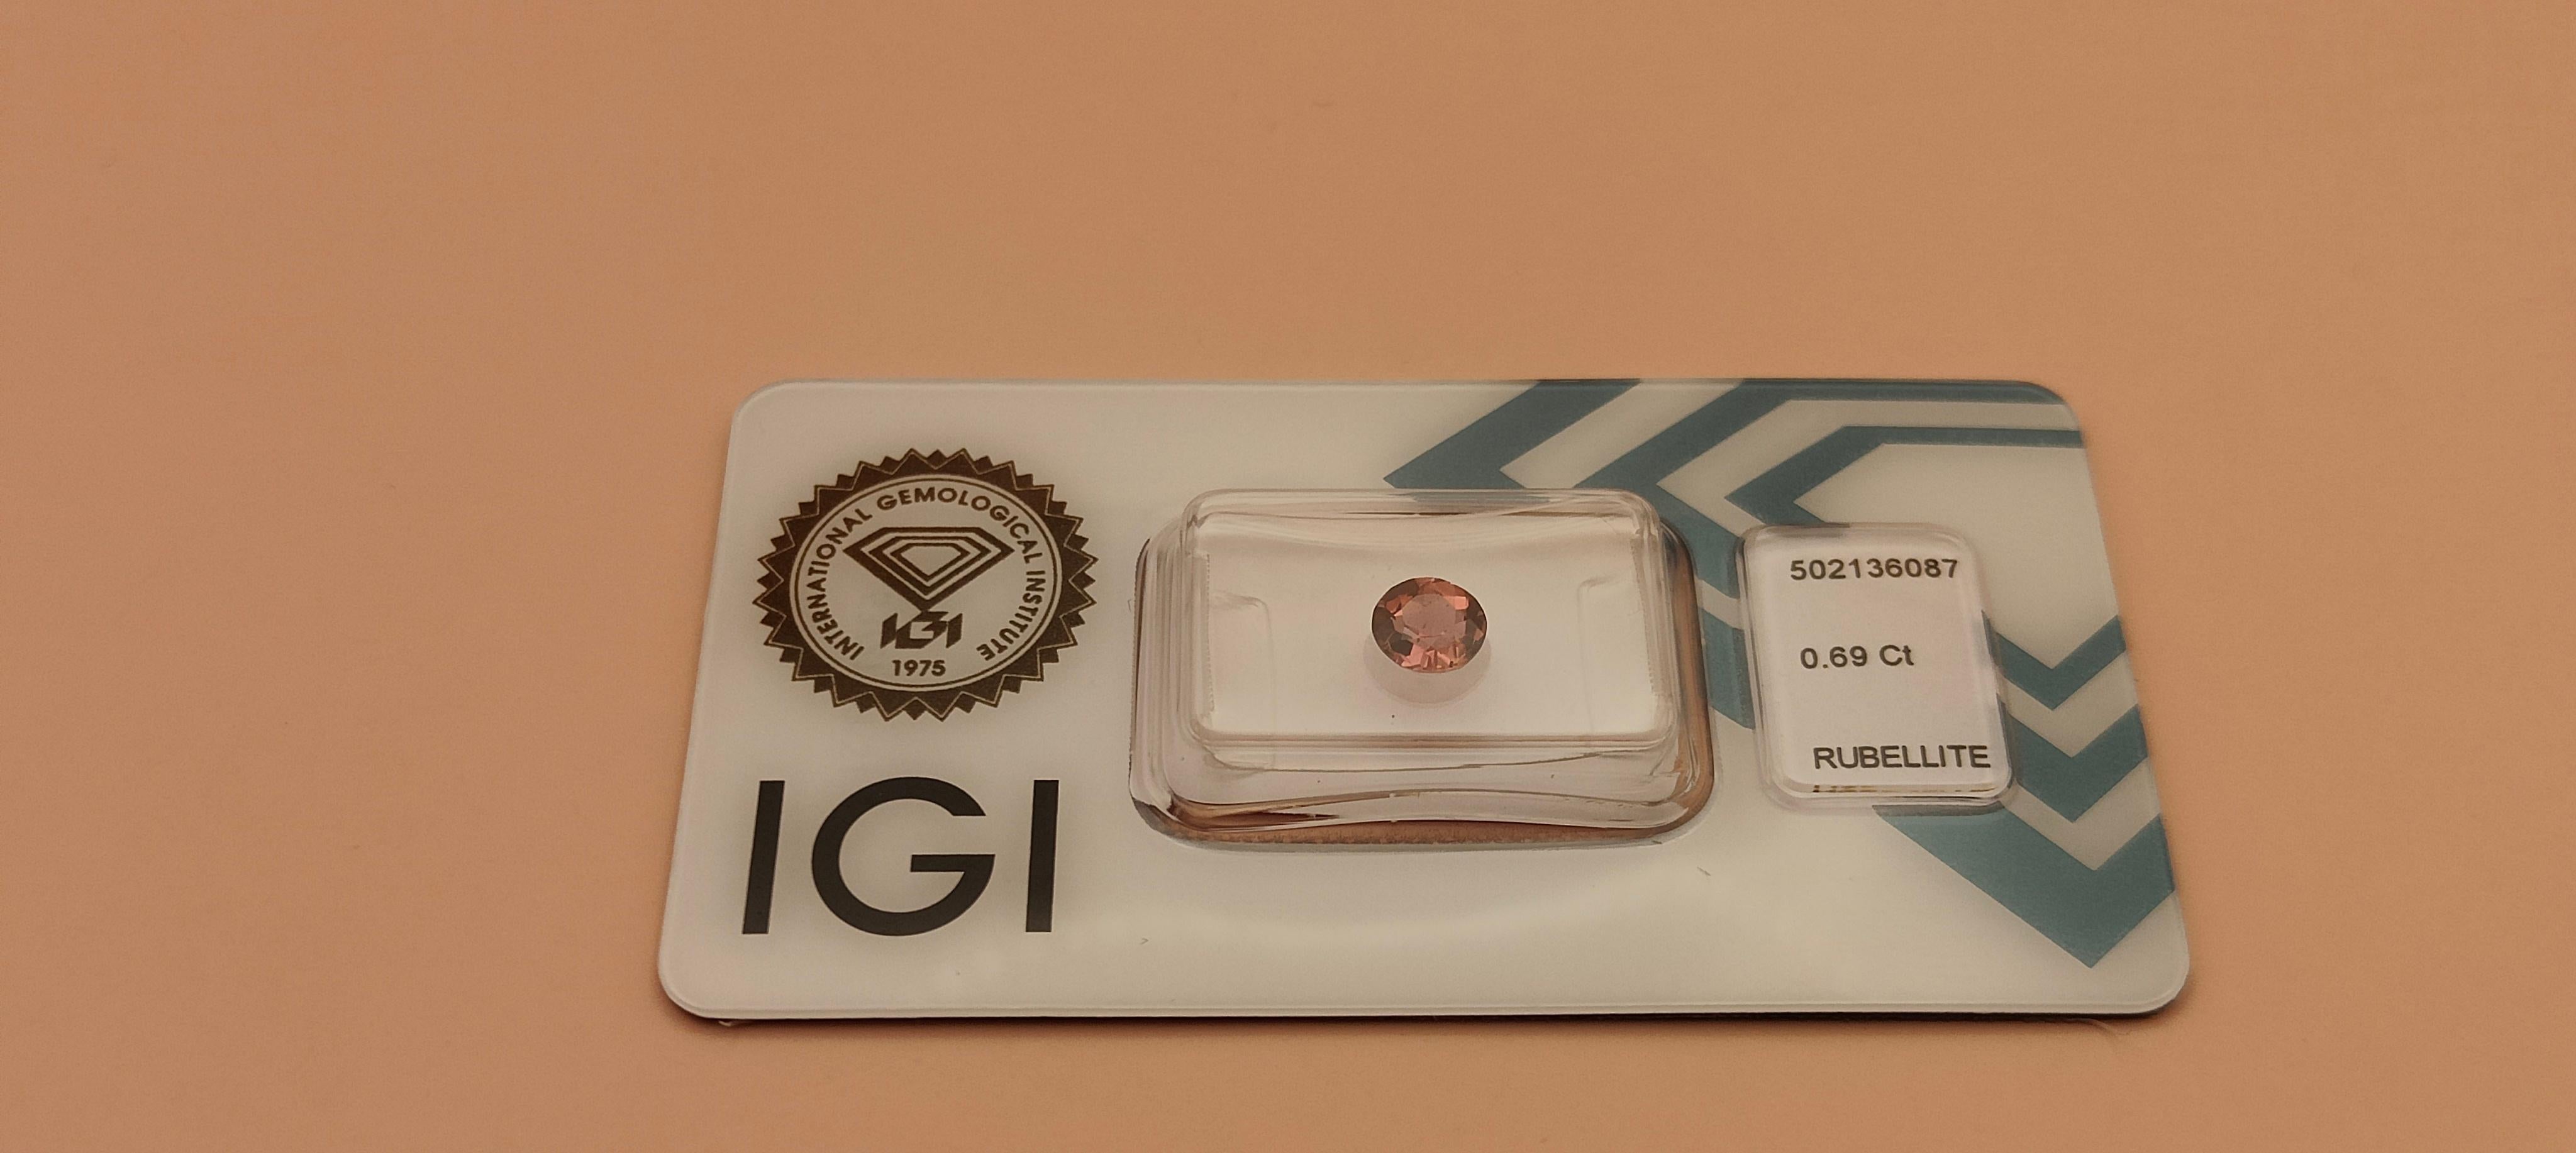 Tourmaline rose violacée naturelle certifiée IGI, pierre précieuse de 0,69 carat Neuf - En vente à London, GB